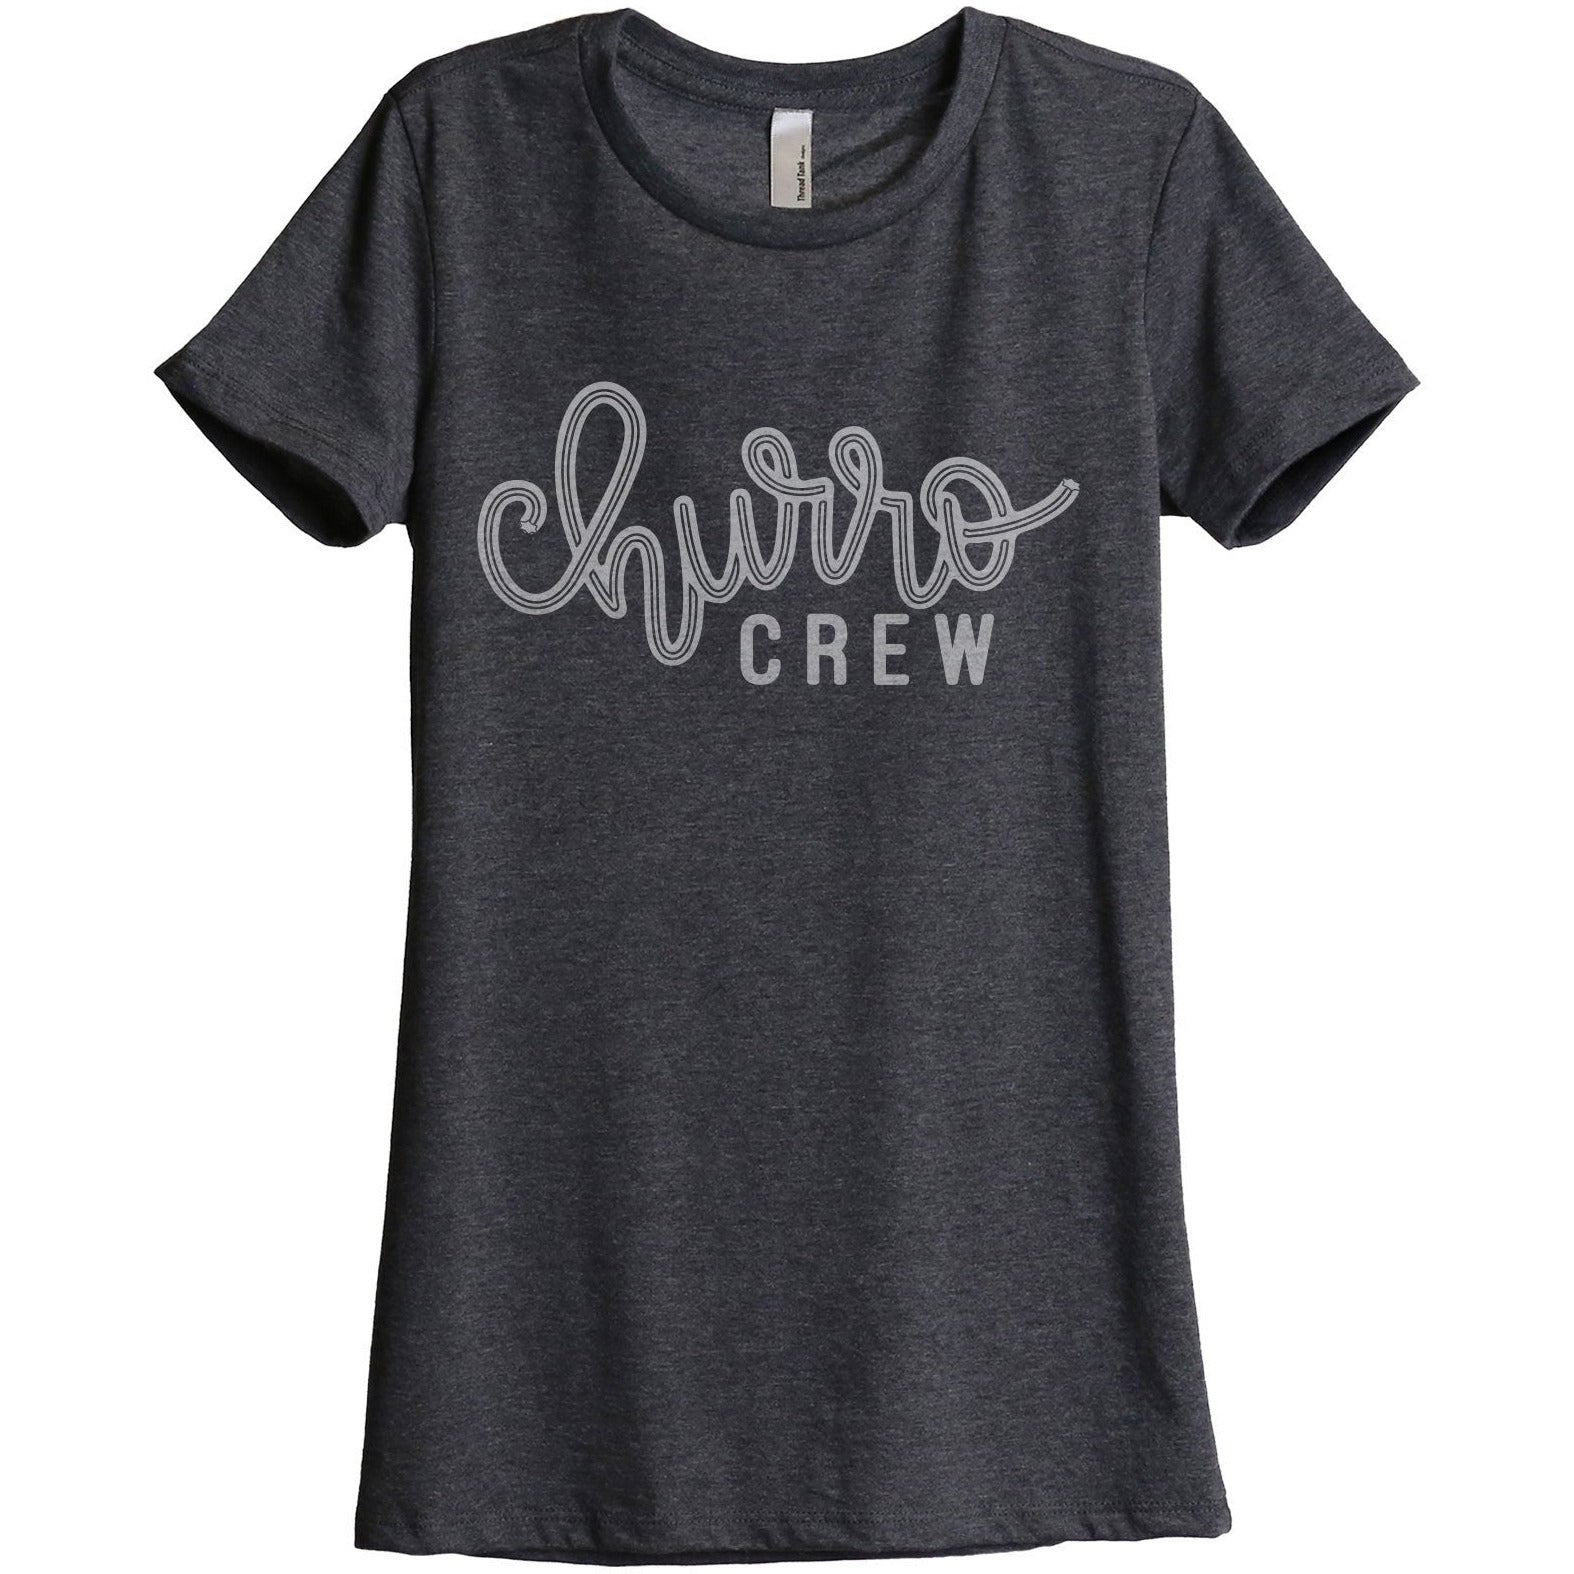 Churro Crew Women's Relaxed Crewneck T-Shirt Top Tee Charcoal Grey
